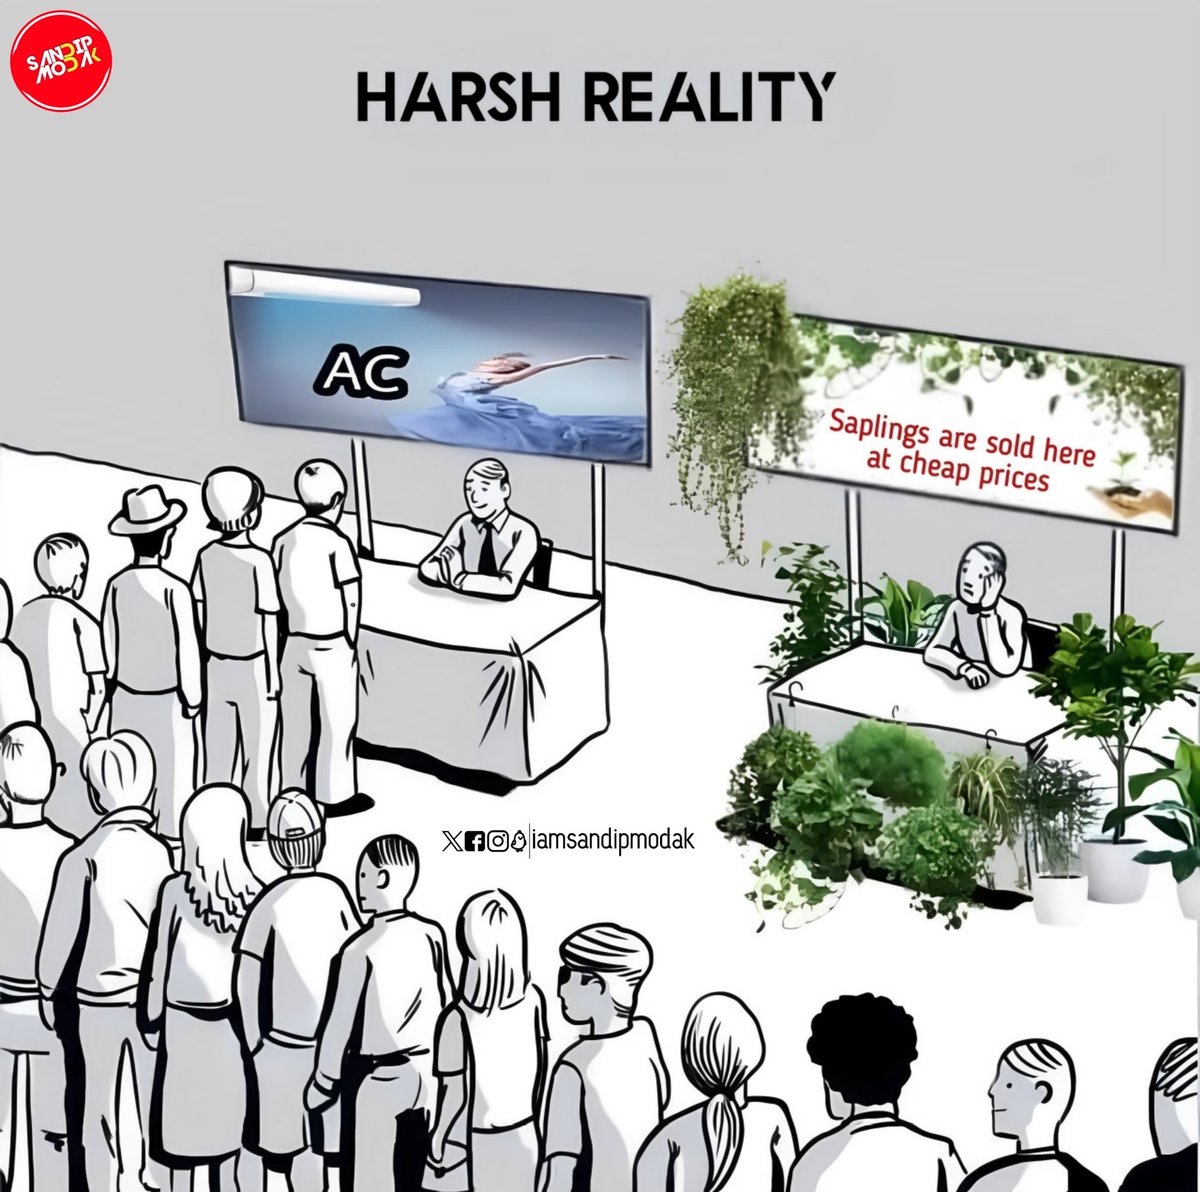 Harsh Reality 😥 
#EnvironmentalProtection #EnvironmentalAwareness #environnement #nature #ClimateEmergency #climatechange